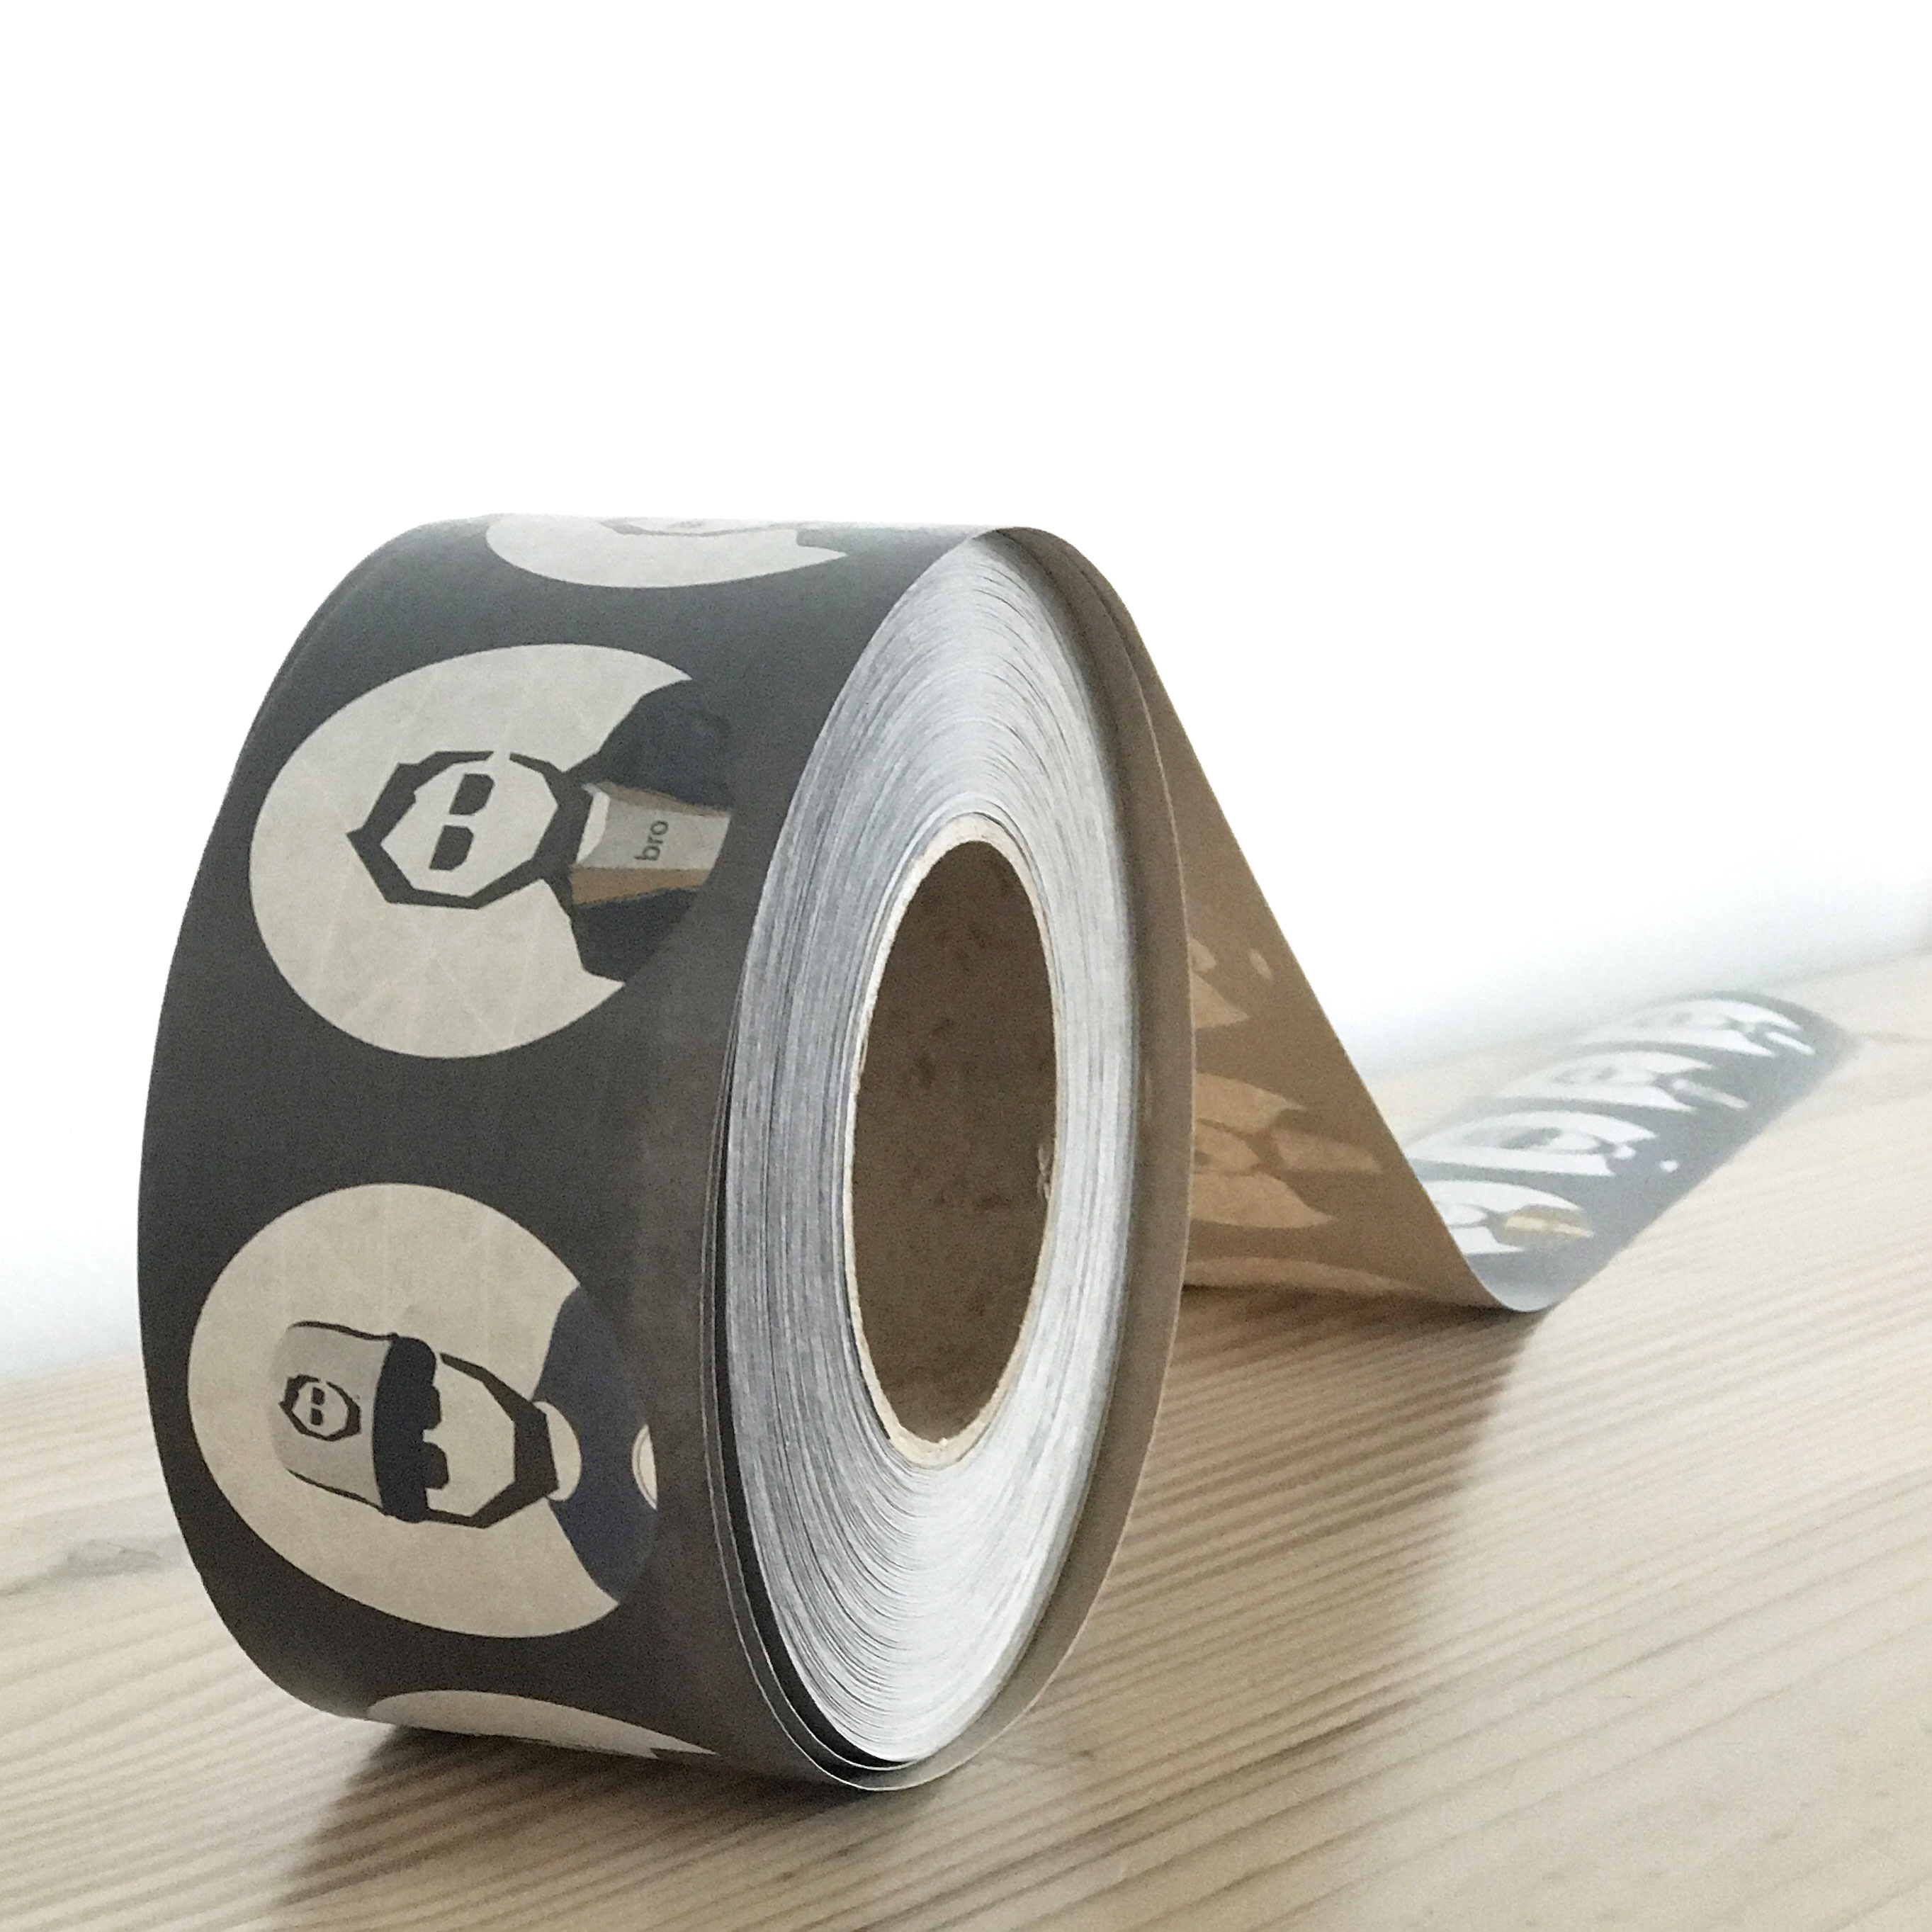 Packaging tape design by Kristin Schleihs